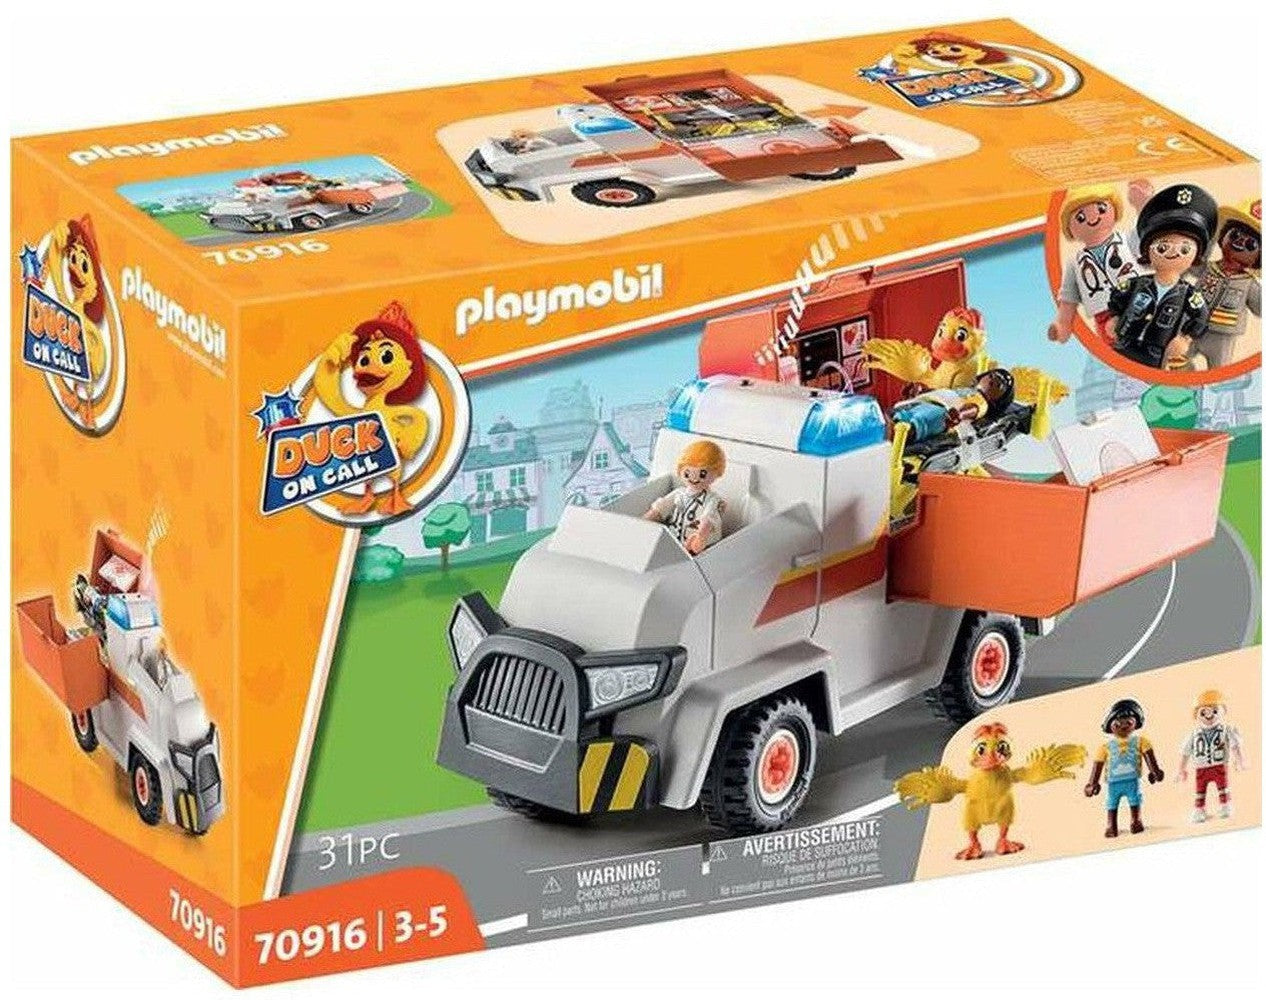 Playset Playmobil Duck on Call Emergency Vehicle Ambulance